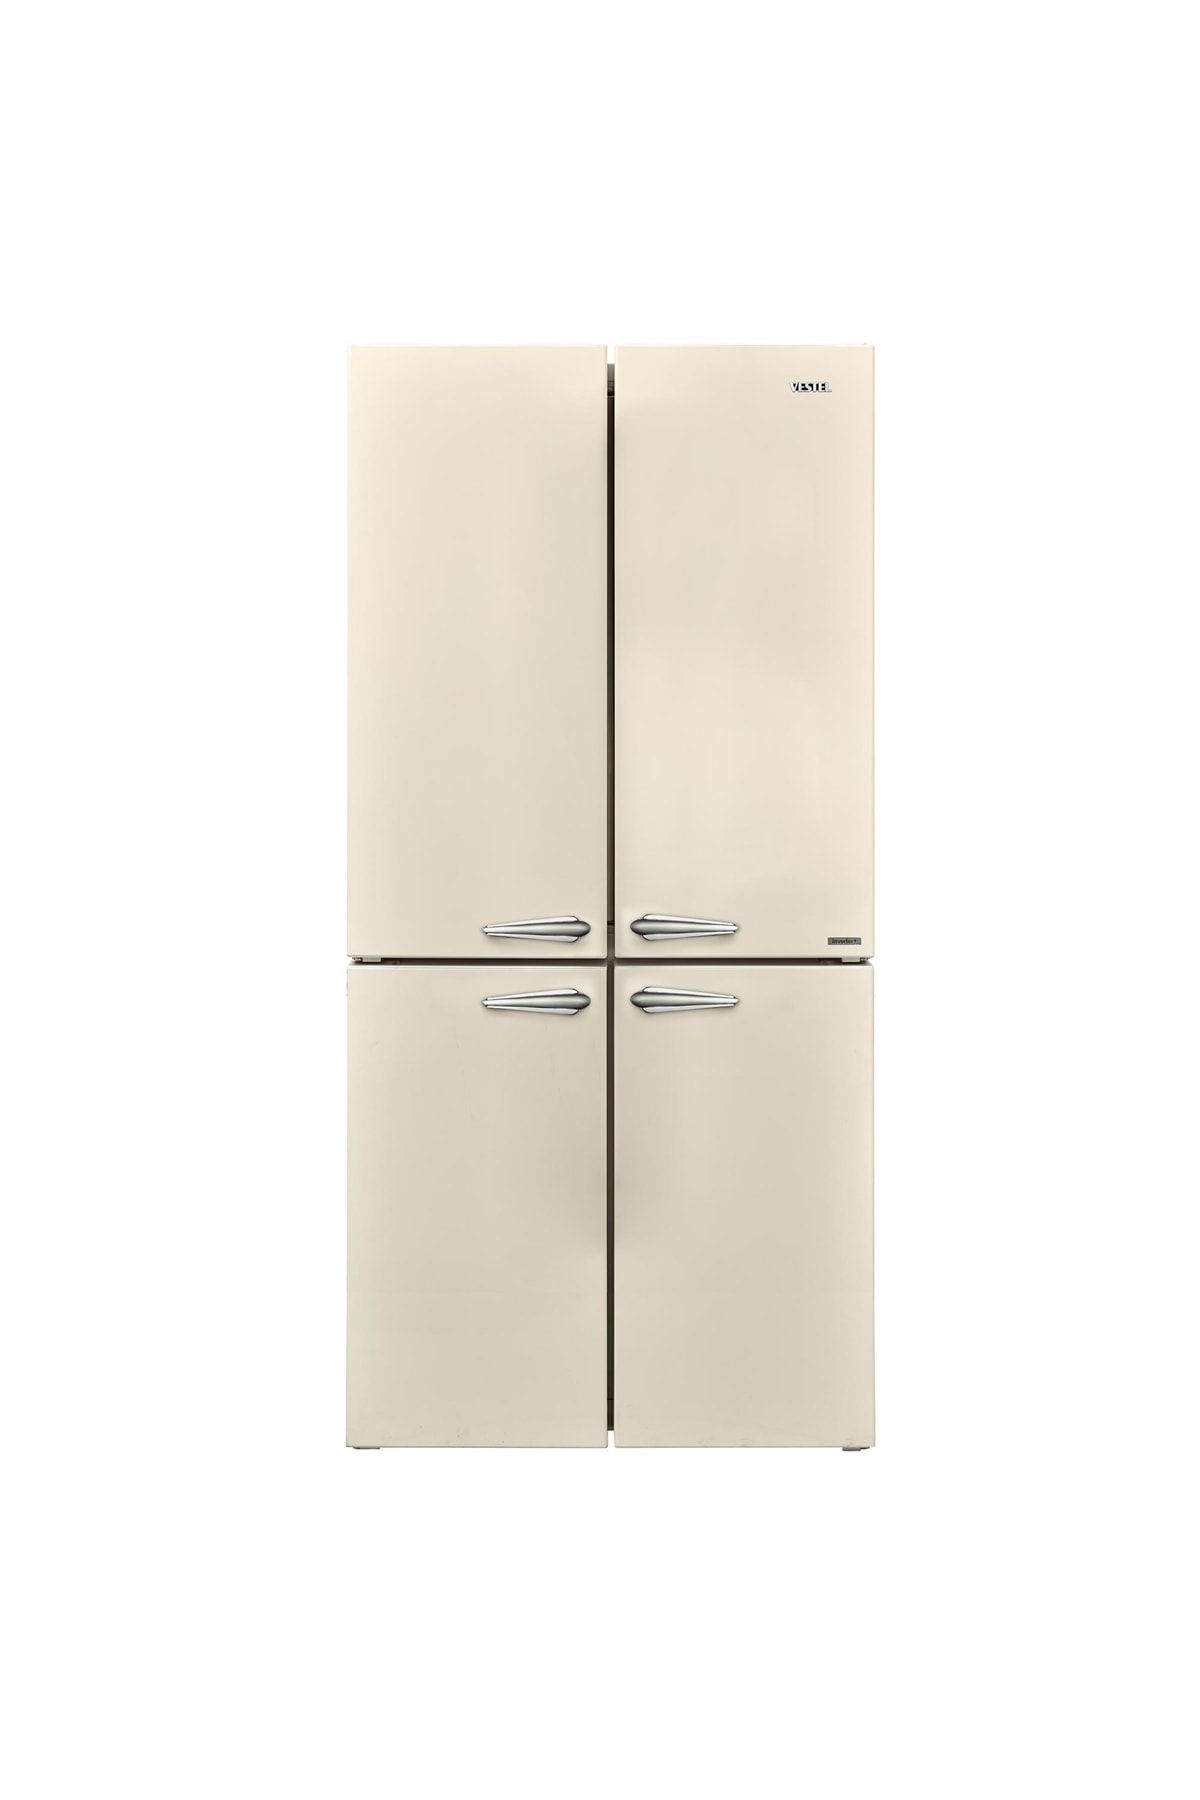 VESTEL RETRO FD56001 BEJ Gardırop Tipi Buzdolabı